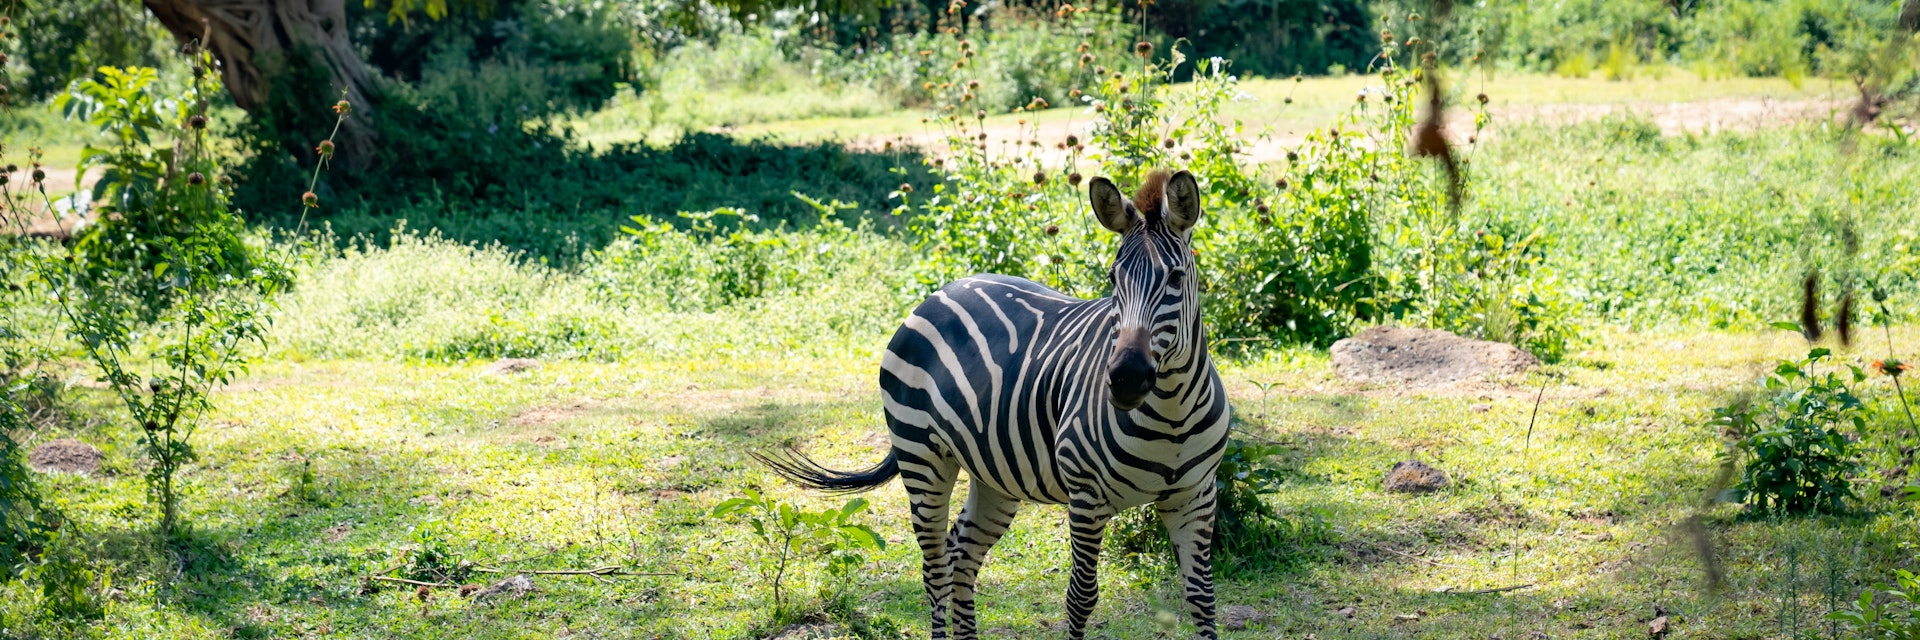 A zebra at the Uganda Wildlife Conservation Education Center.